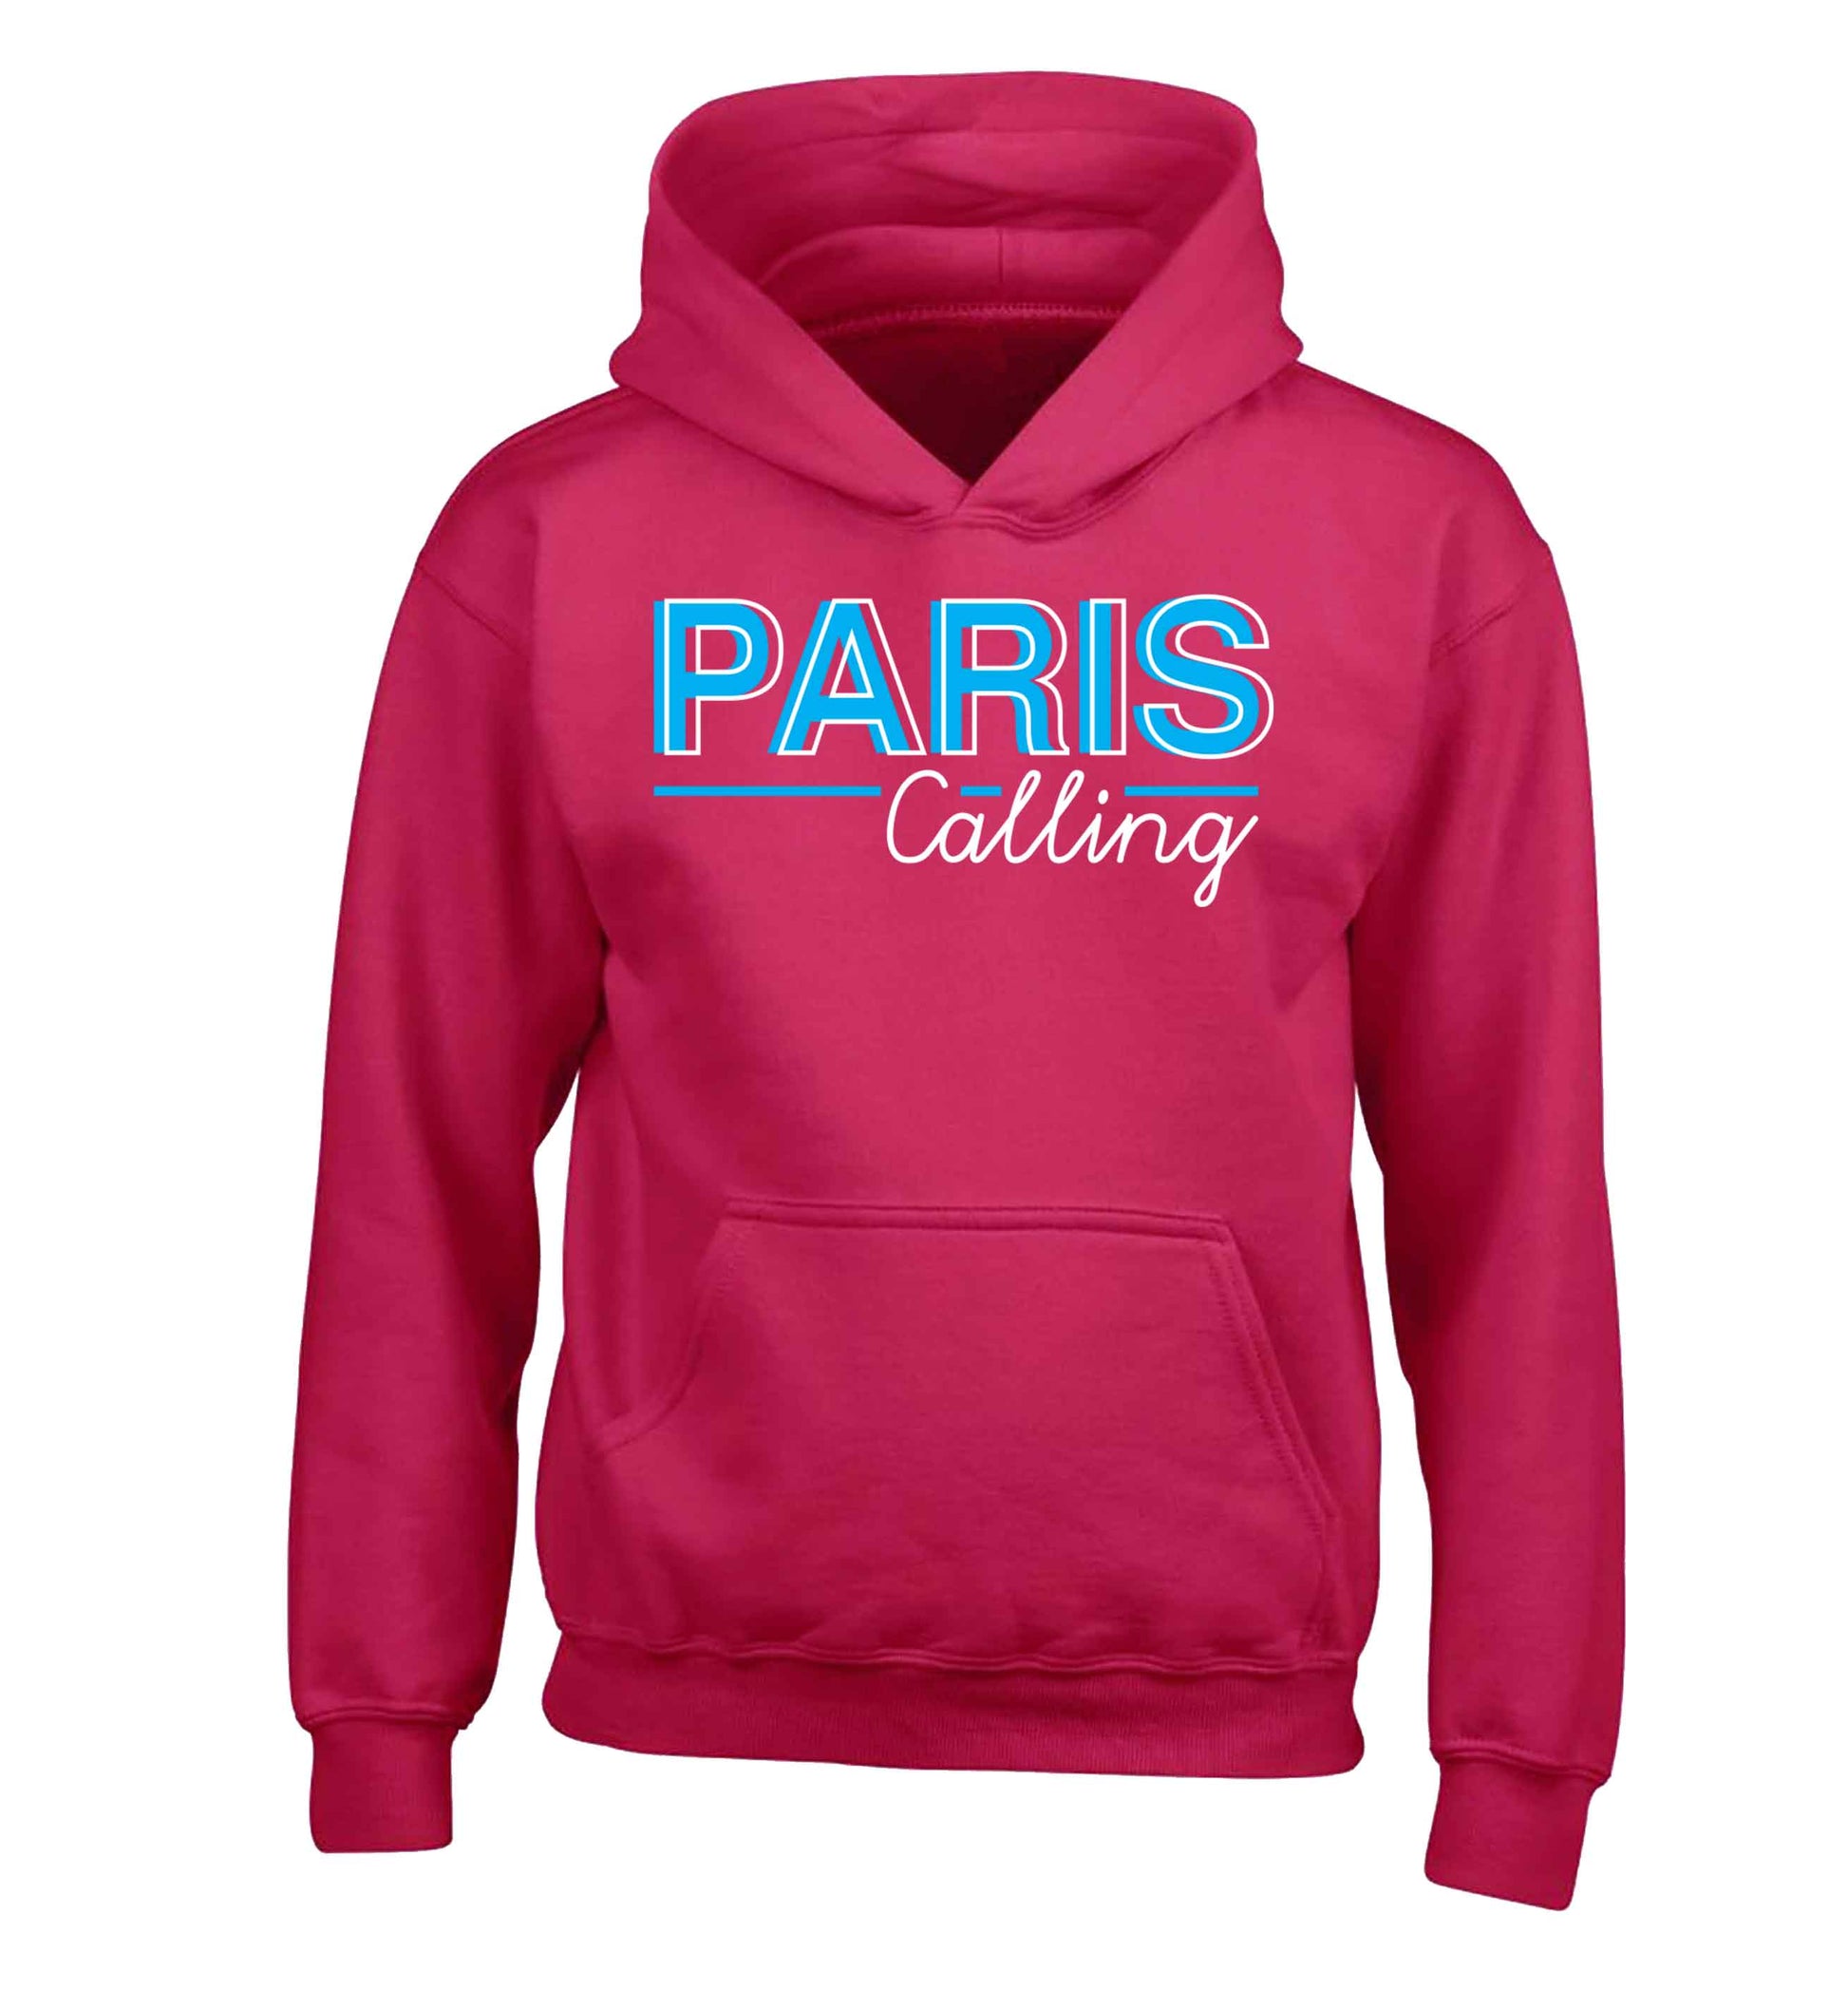 Paris calling children's pink hoodie 12-13 Years